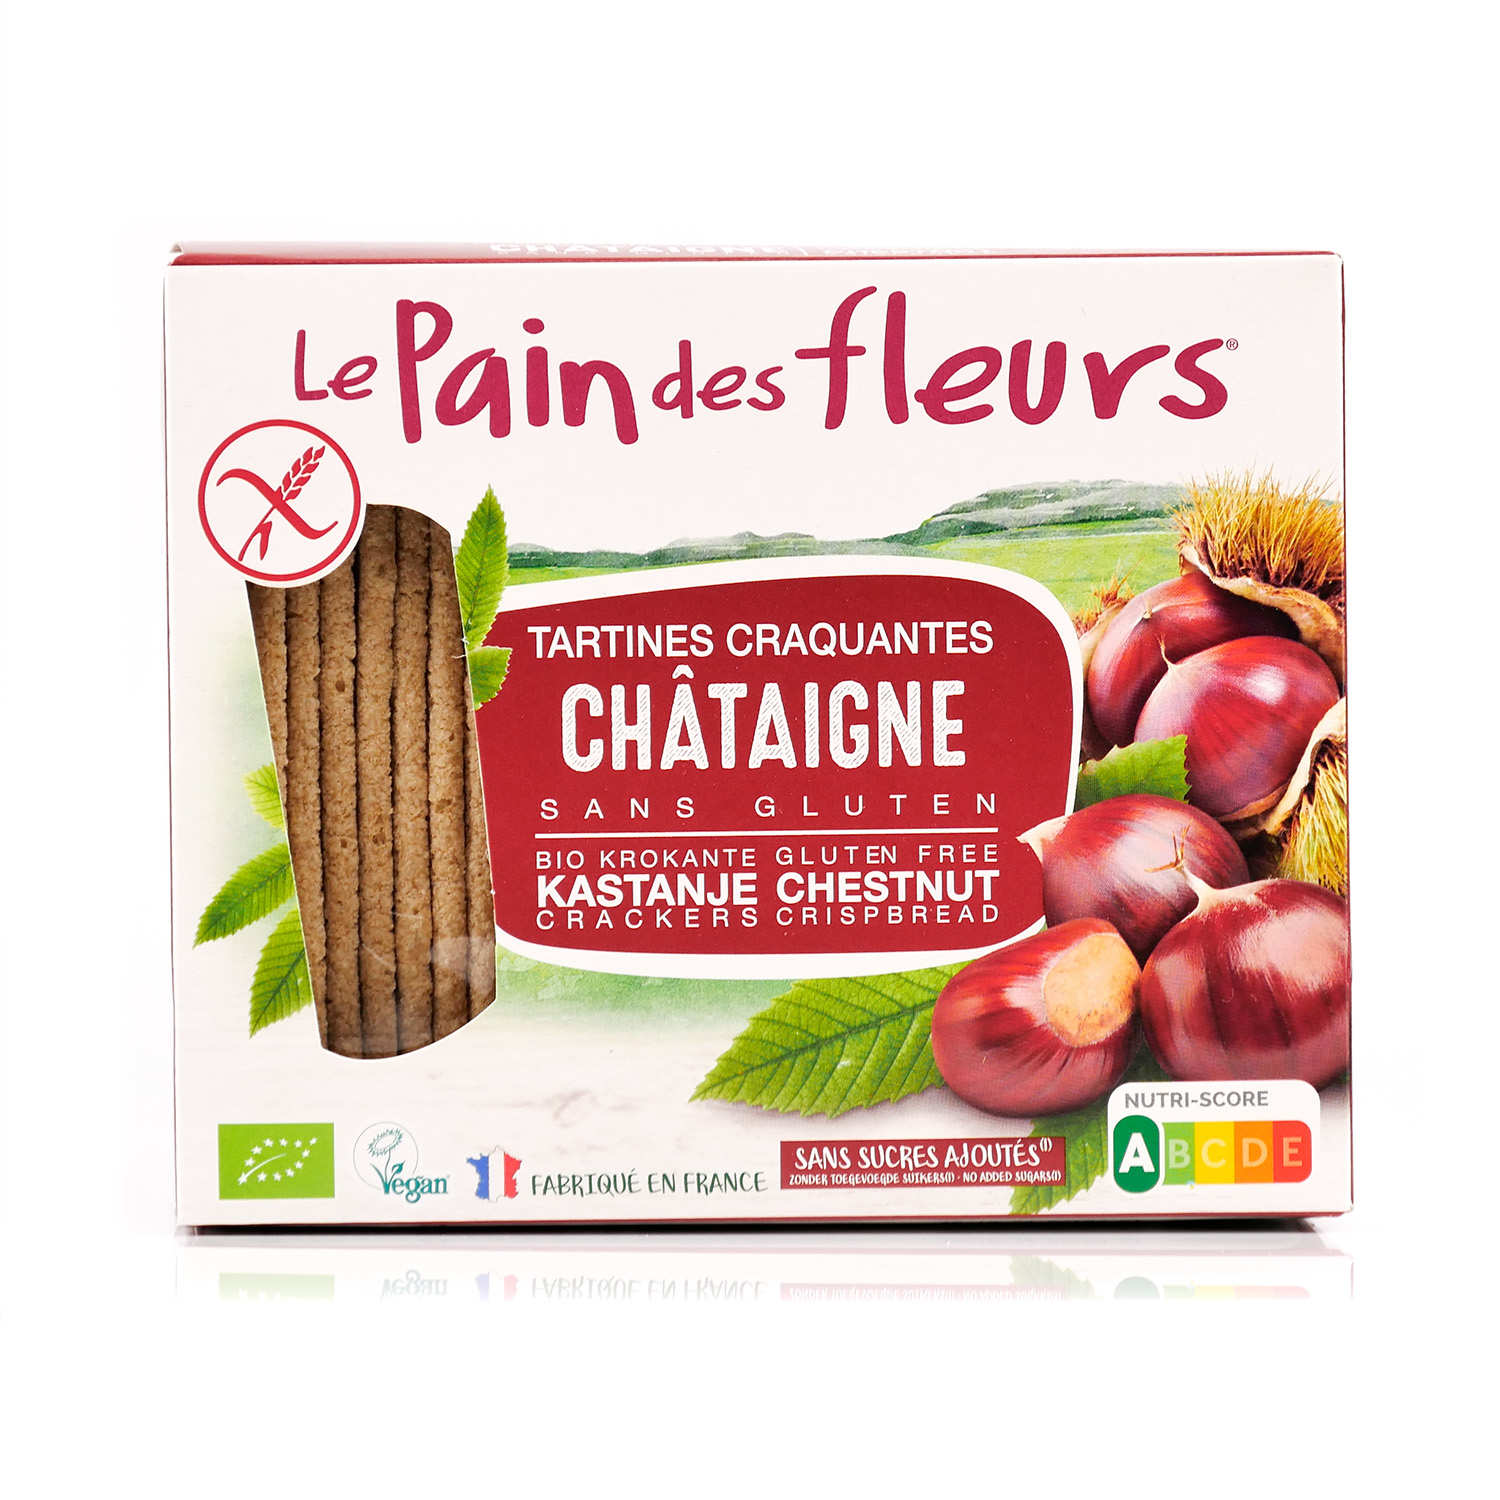  Le Pain Des Fleurs Organic Ancient Grain Crispbread, Low  Sodium, Low Fat, Vegan, Gluten Free Crackers